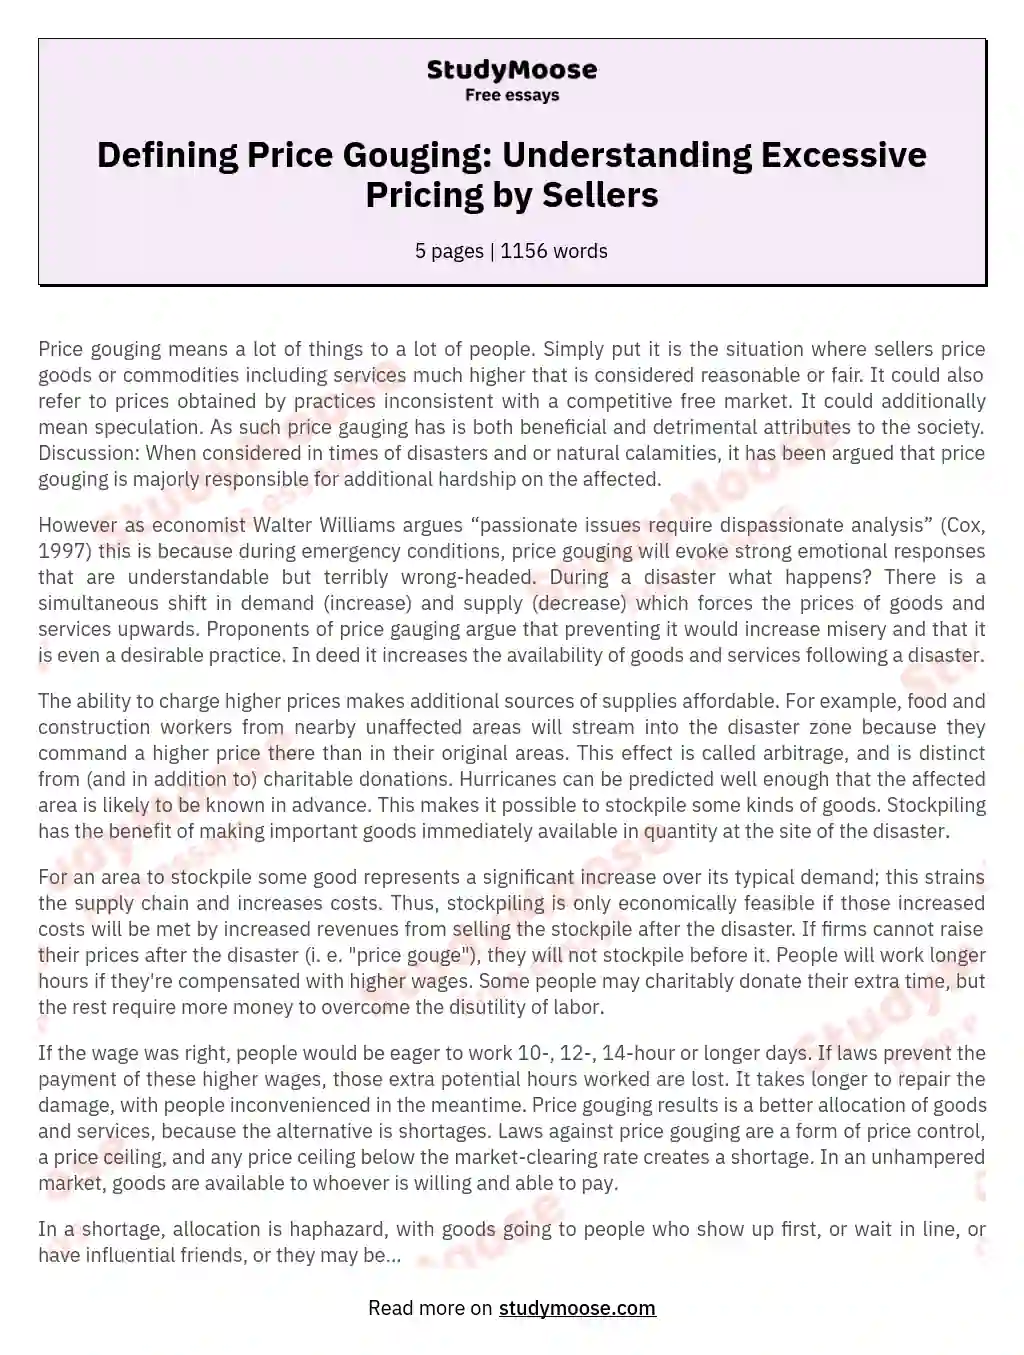 Defining Price Gouging: Understanding Excessive Pricing by Sellers